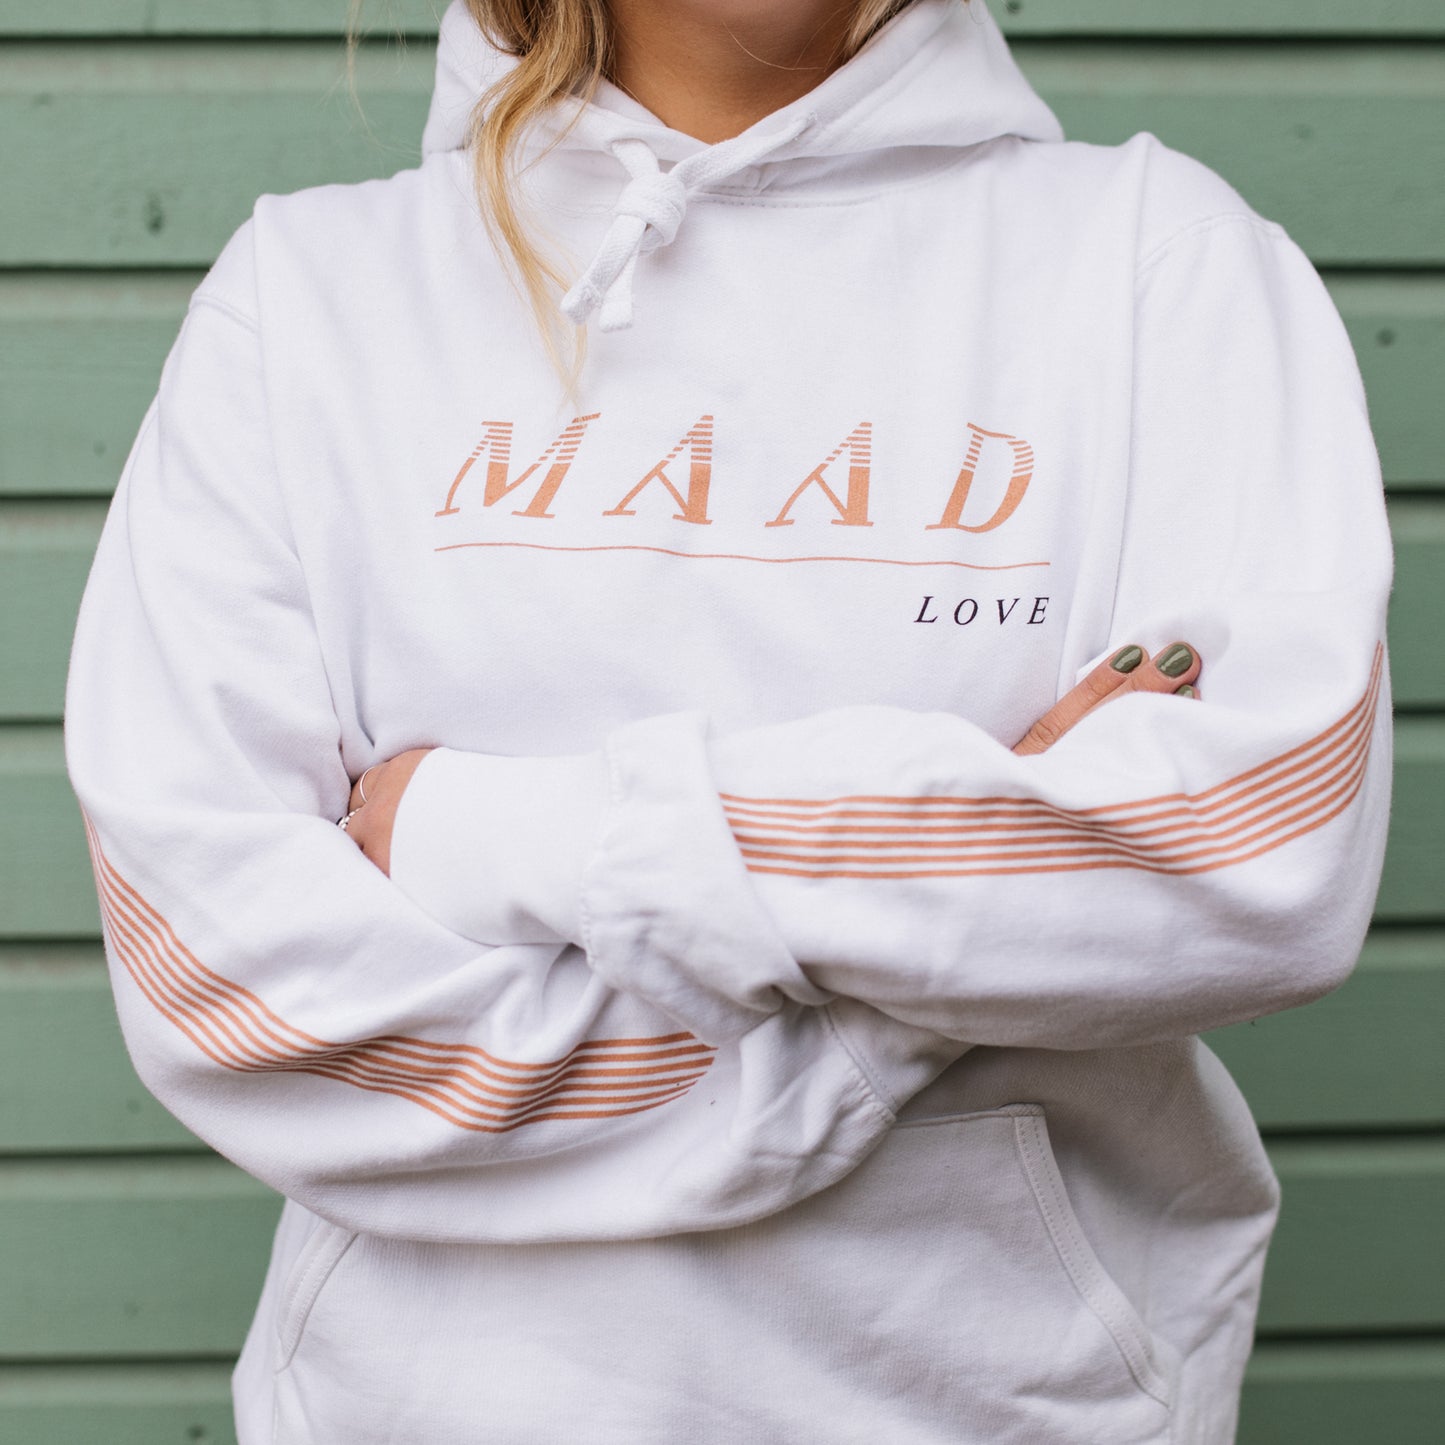 White | VS Maad Love Pullover